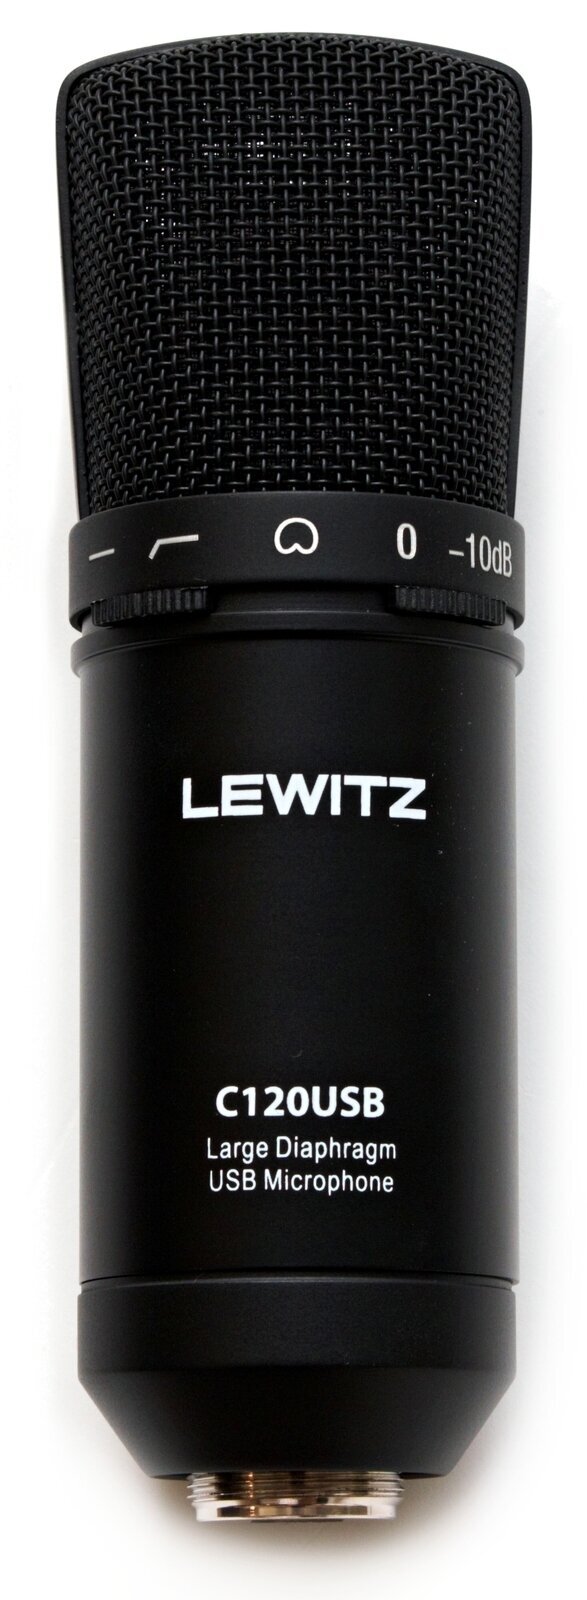 USB Microphone Lewitz C120USB